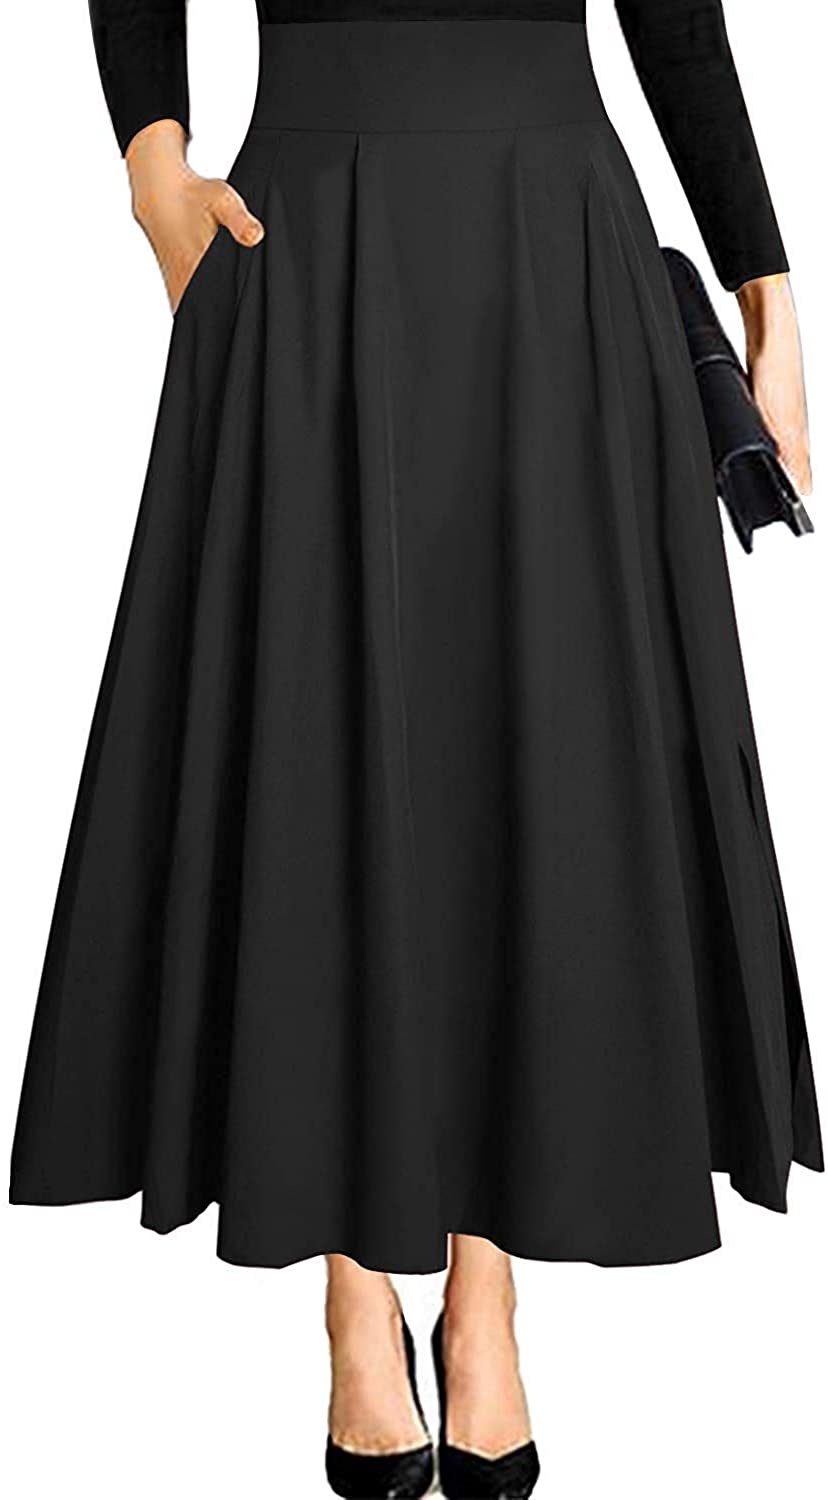 Kcocoo Women's Skirts Casual A-Line Skirt High Waist Skirt Ankle Length  Skirts Polyester Black XXL 